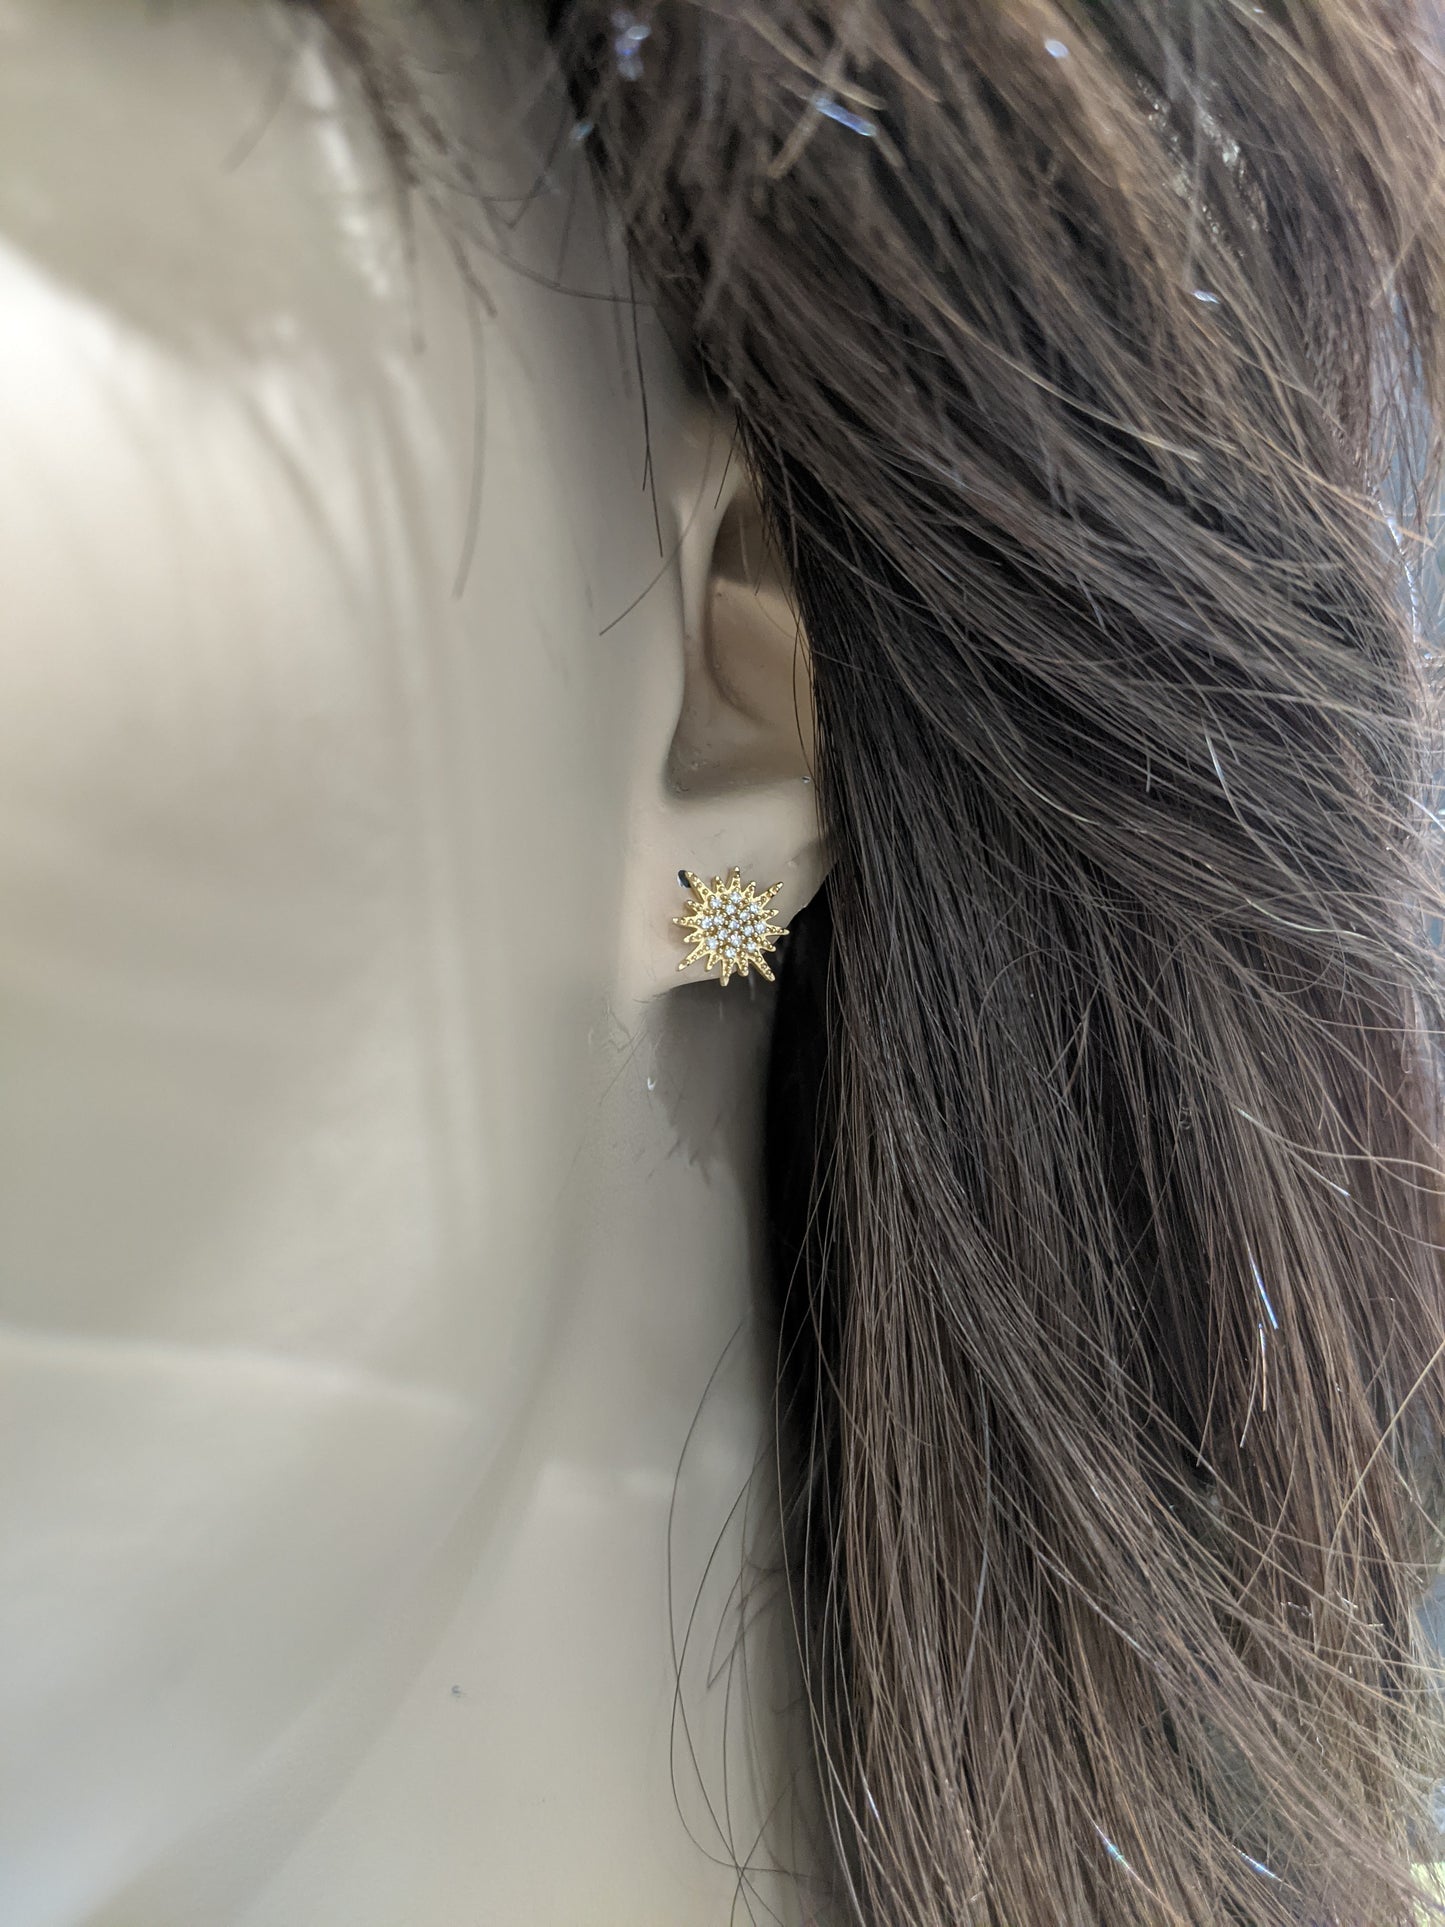 14K Gold And Diamond Stud Earring - HK Jewels